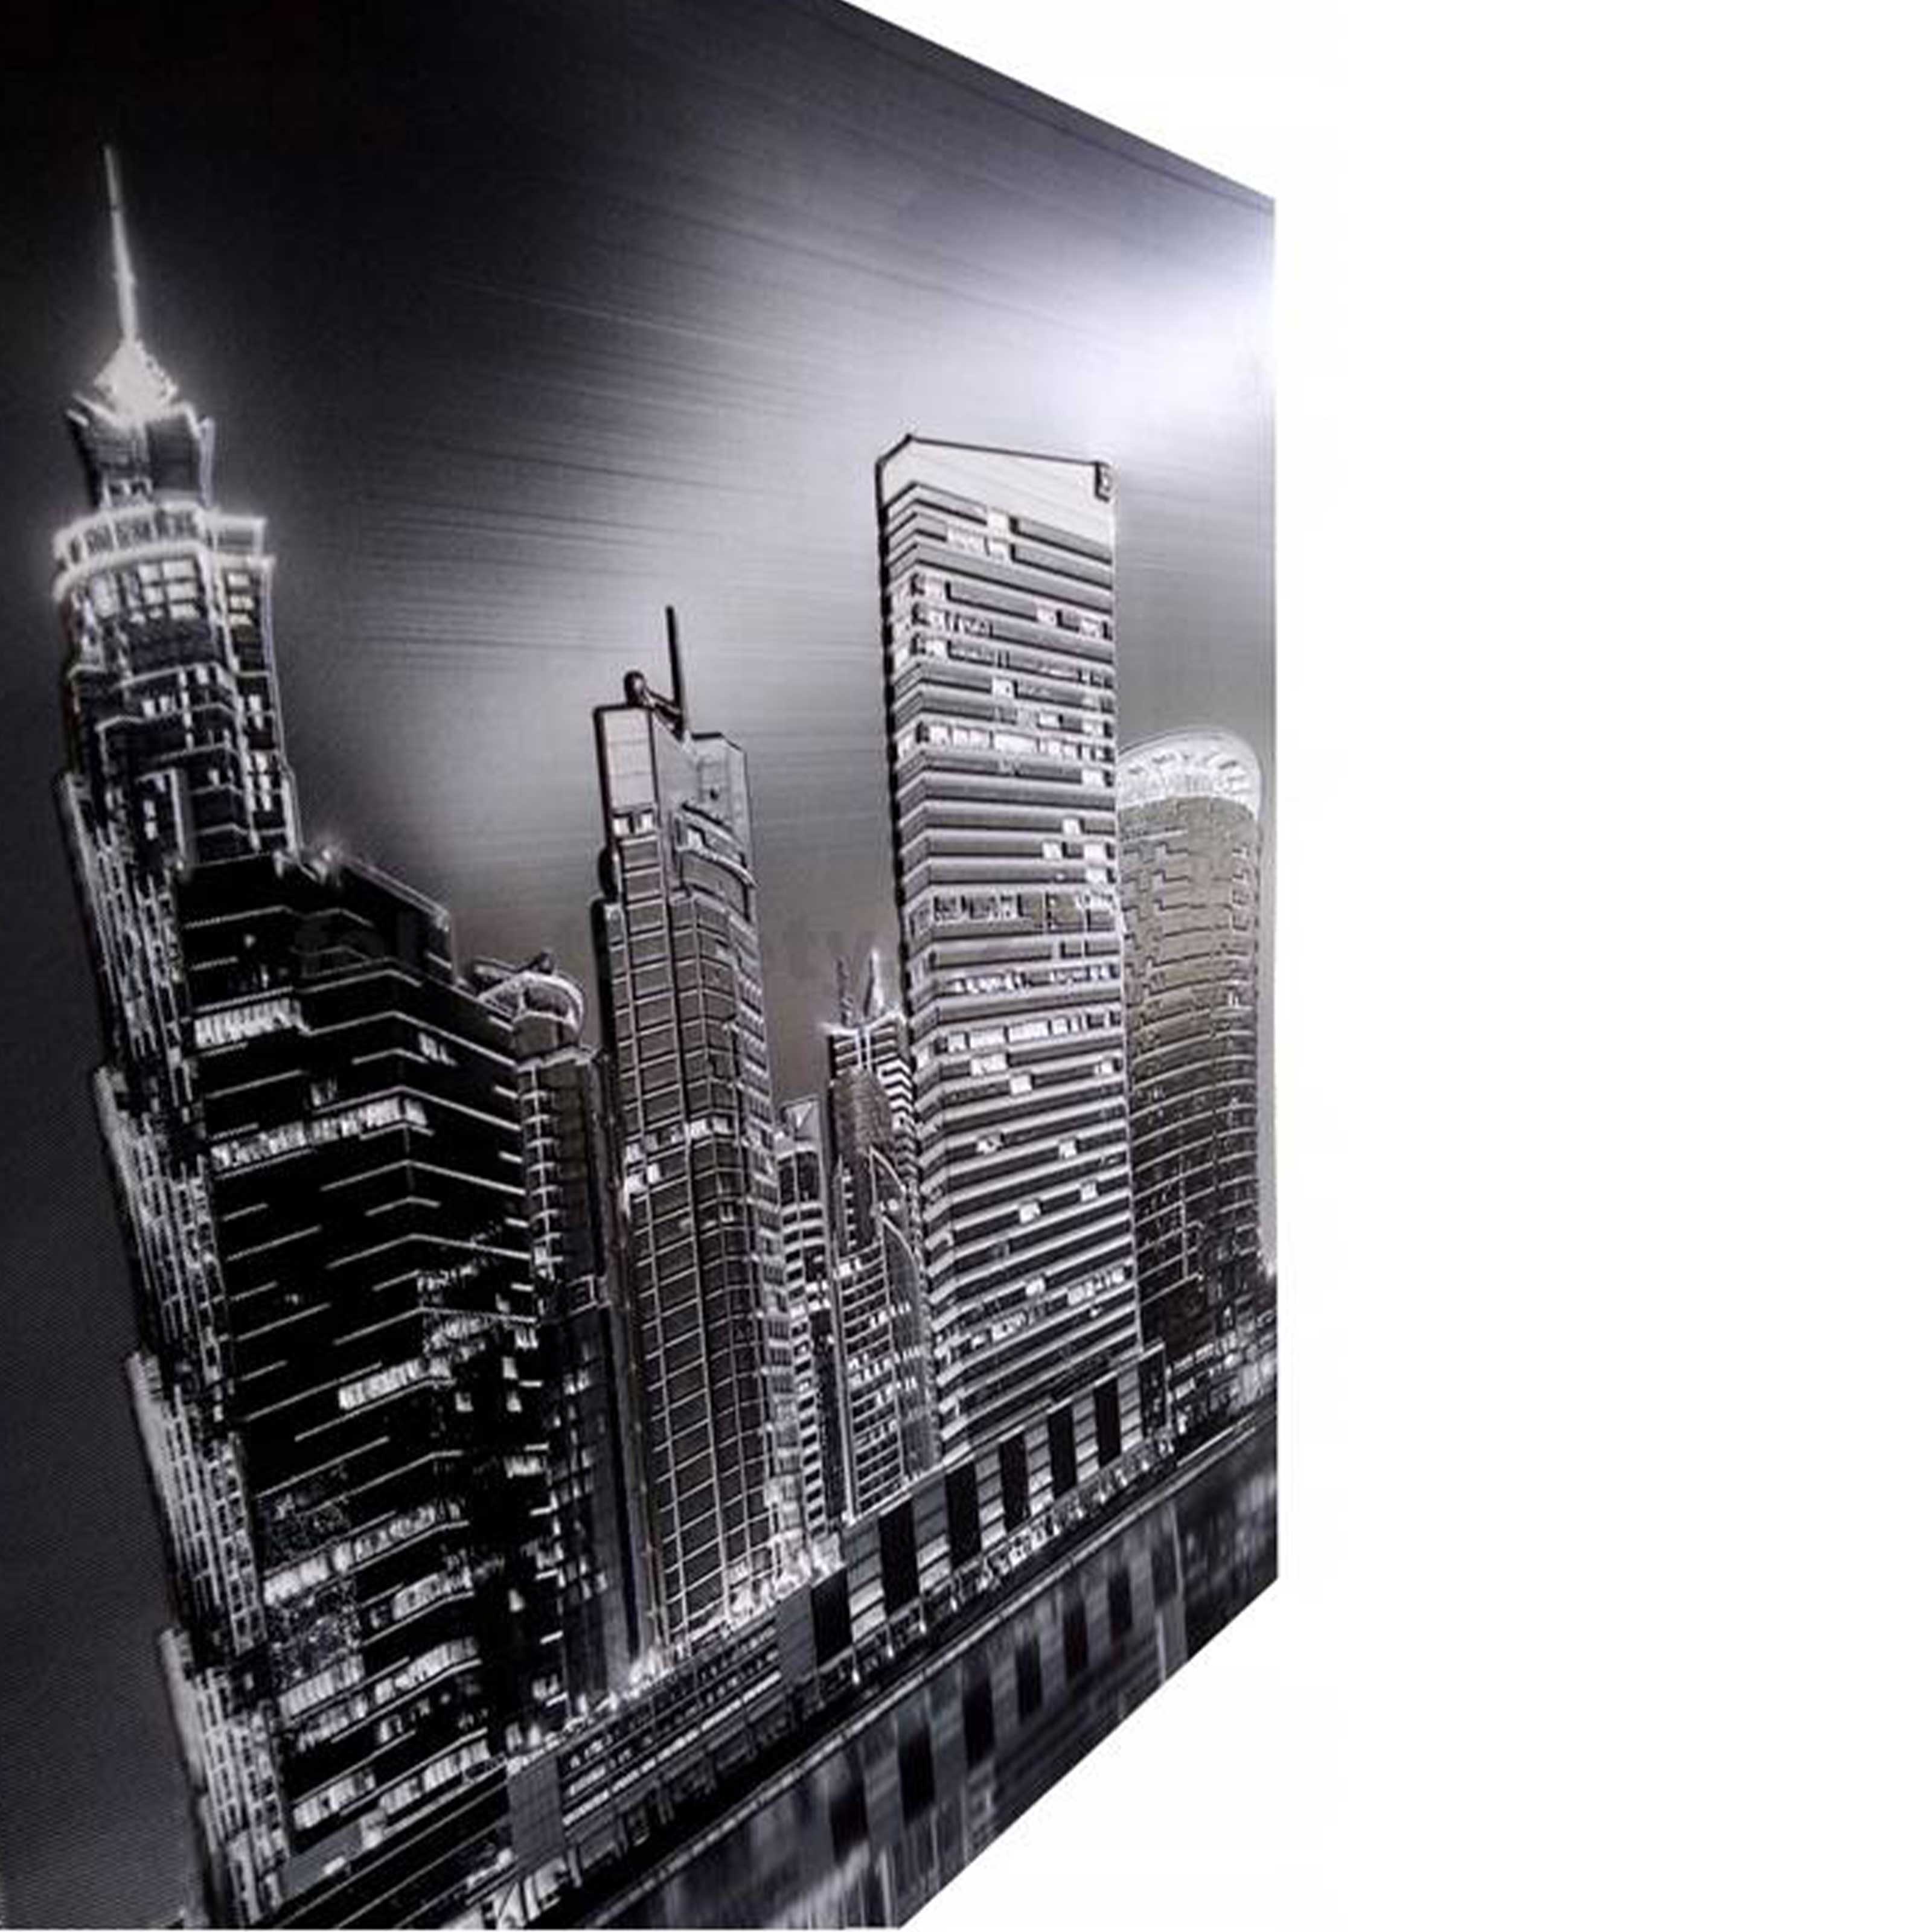 Pannelli 3D Rivestimento a parete in PVC di design per cucine, pub, bagni, salotti, ristoranti, negozi - Eternal Parquet